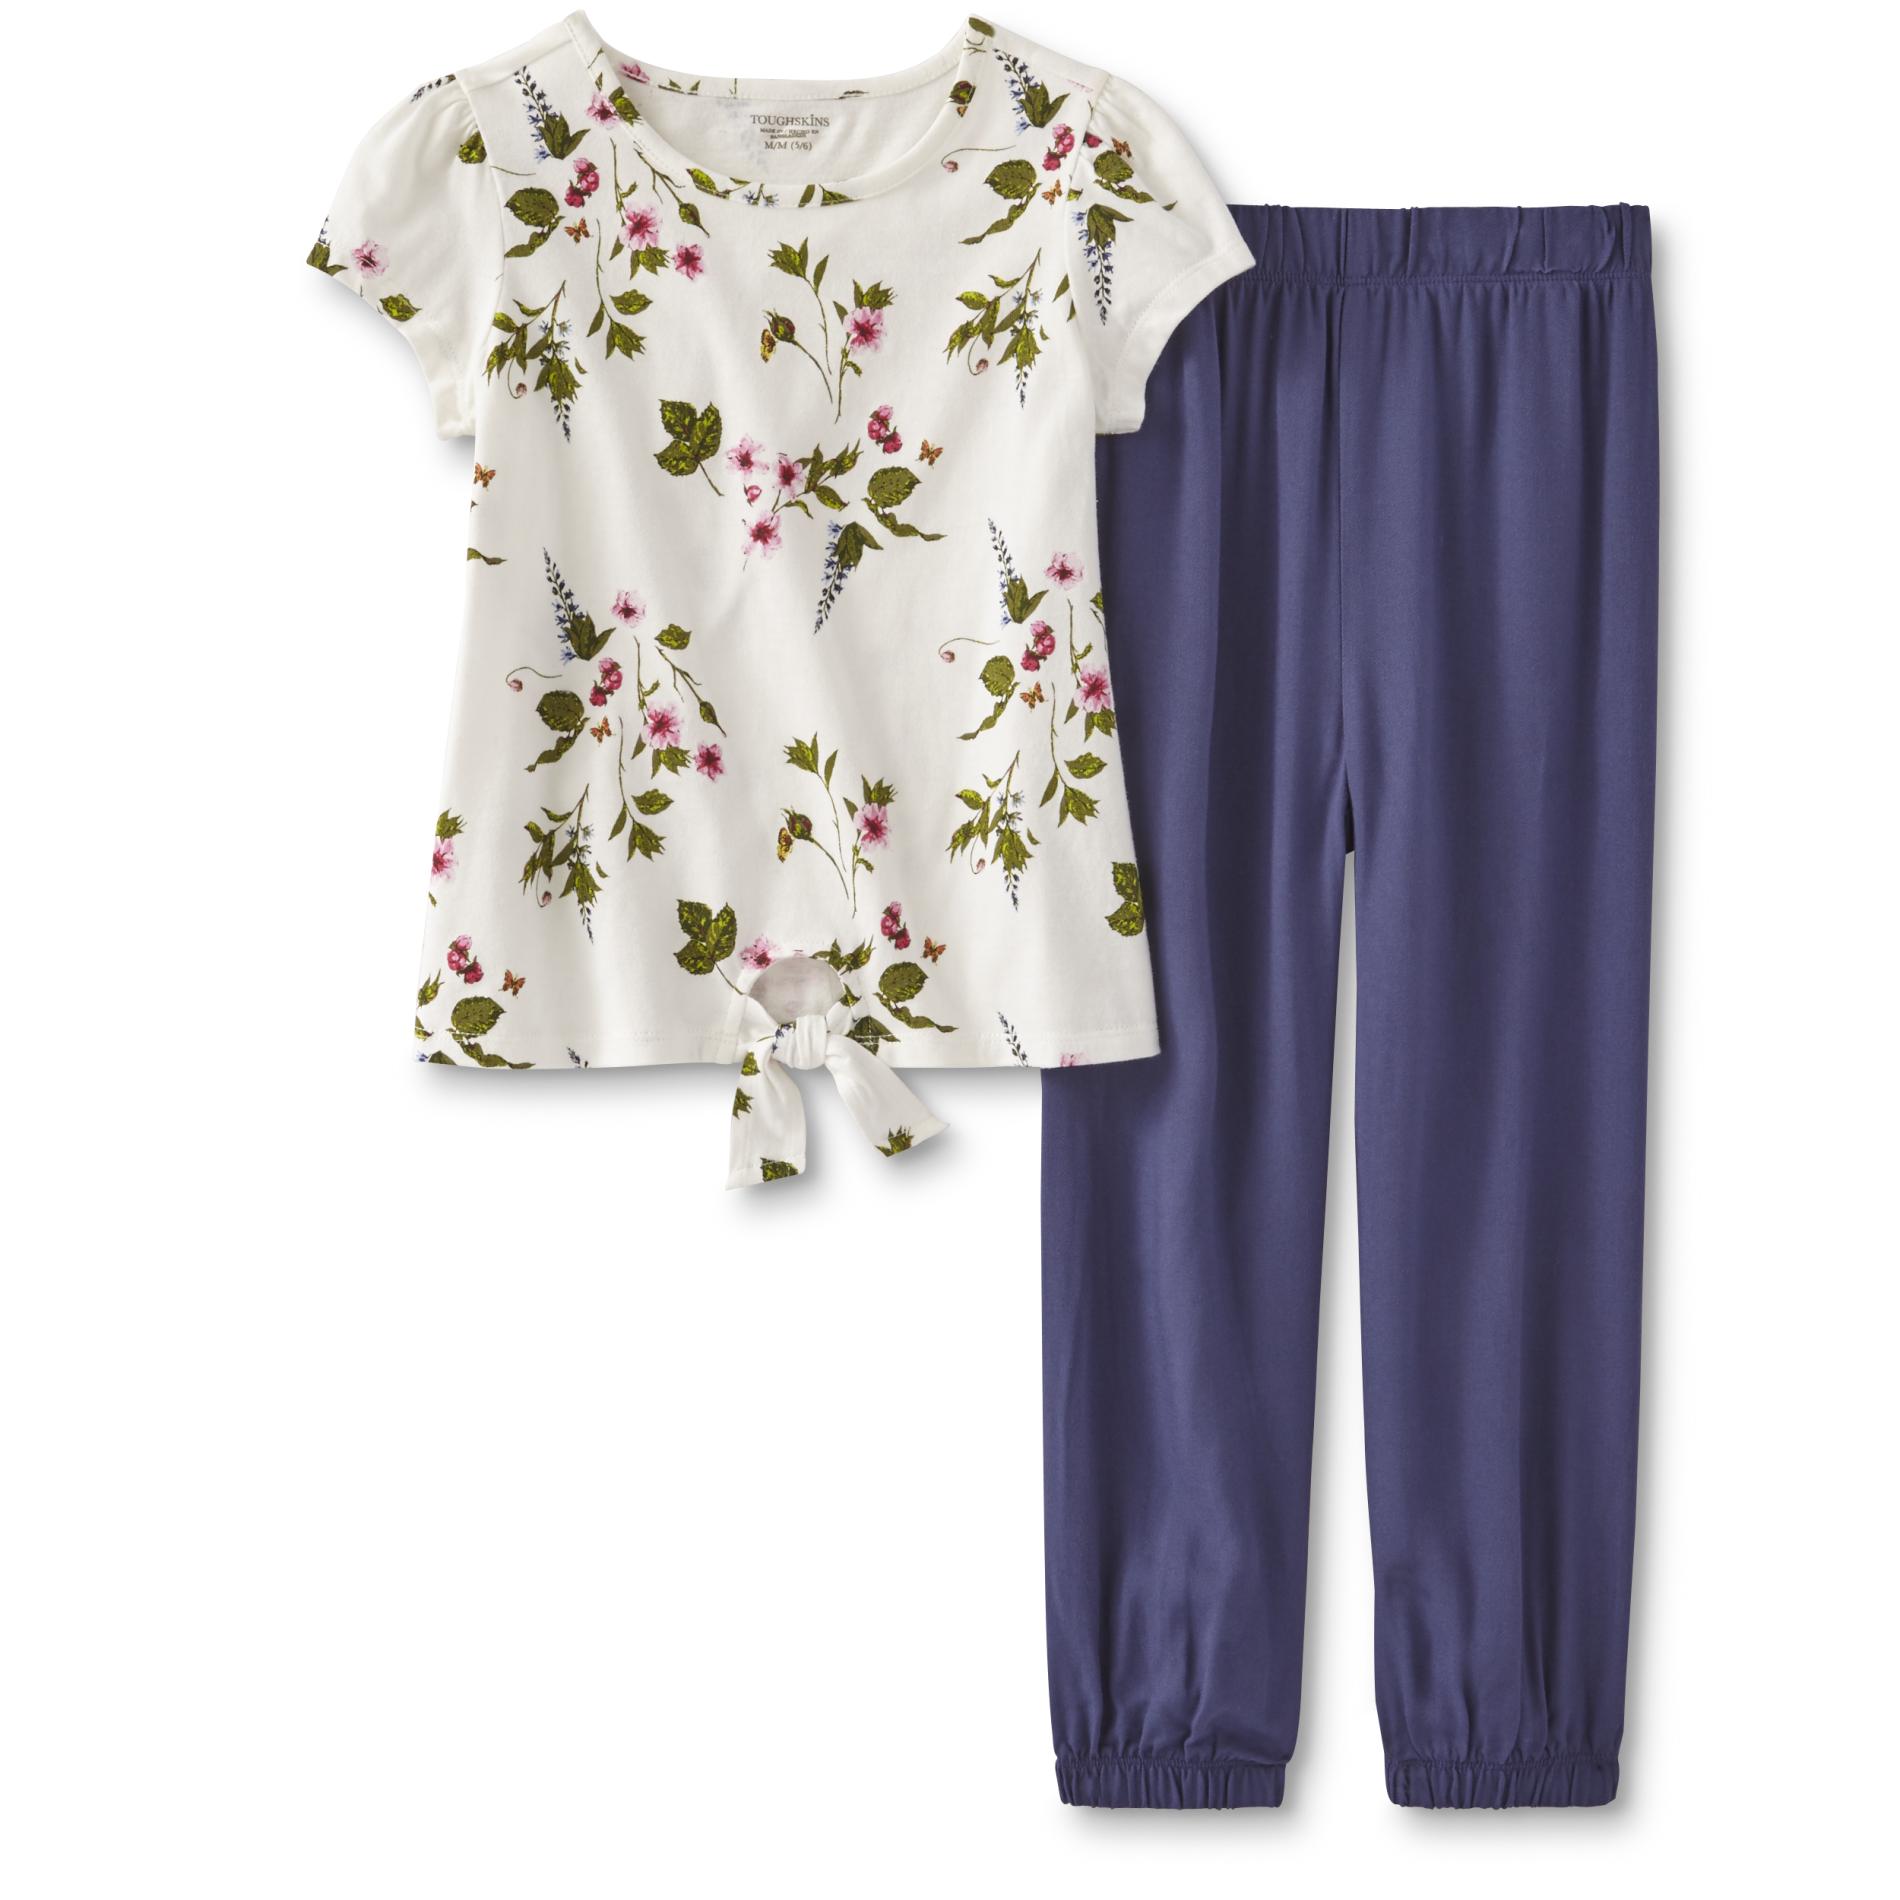 Toughskins Infant & Toddler Girls' T-Shirt & Pants - Floral